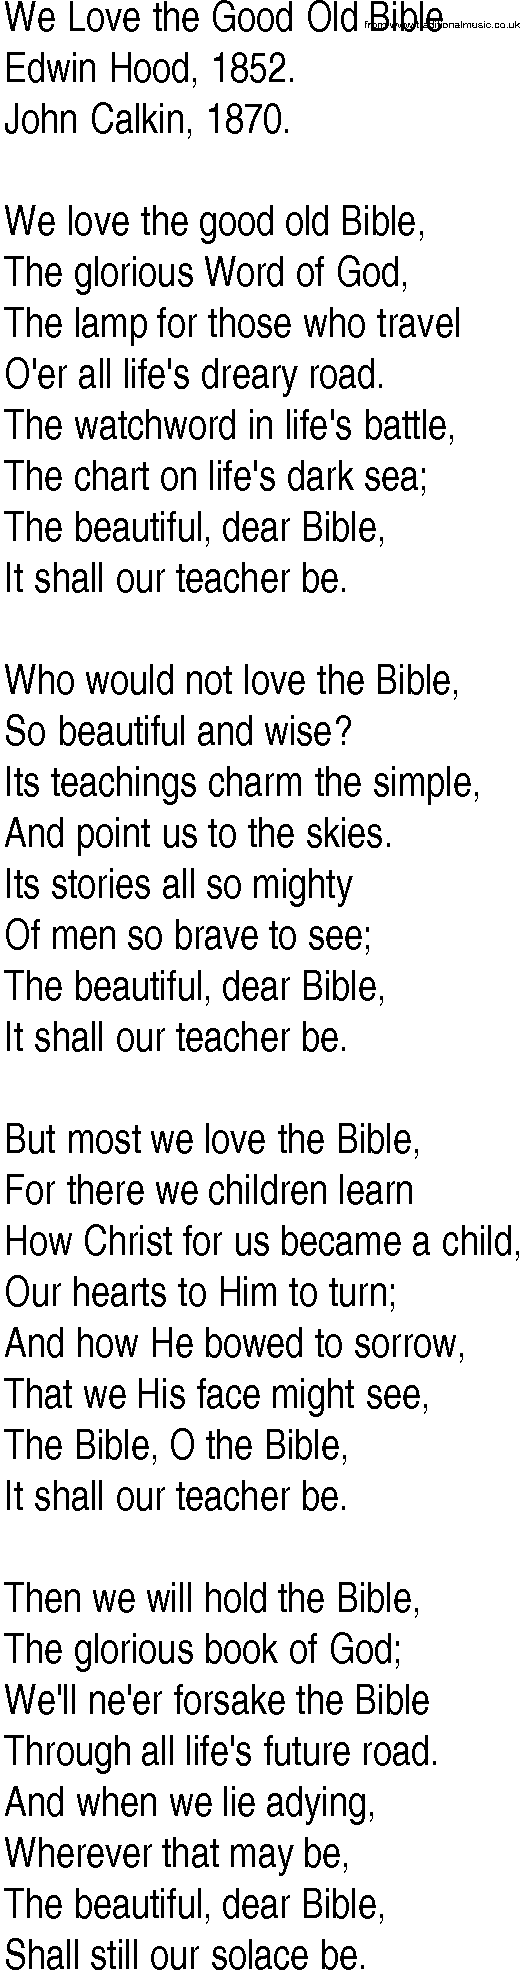 Hymn and Gospel Song: We Love the Good Old Bible by Edwin Hood lyrics